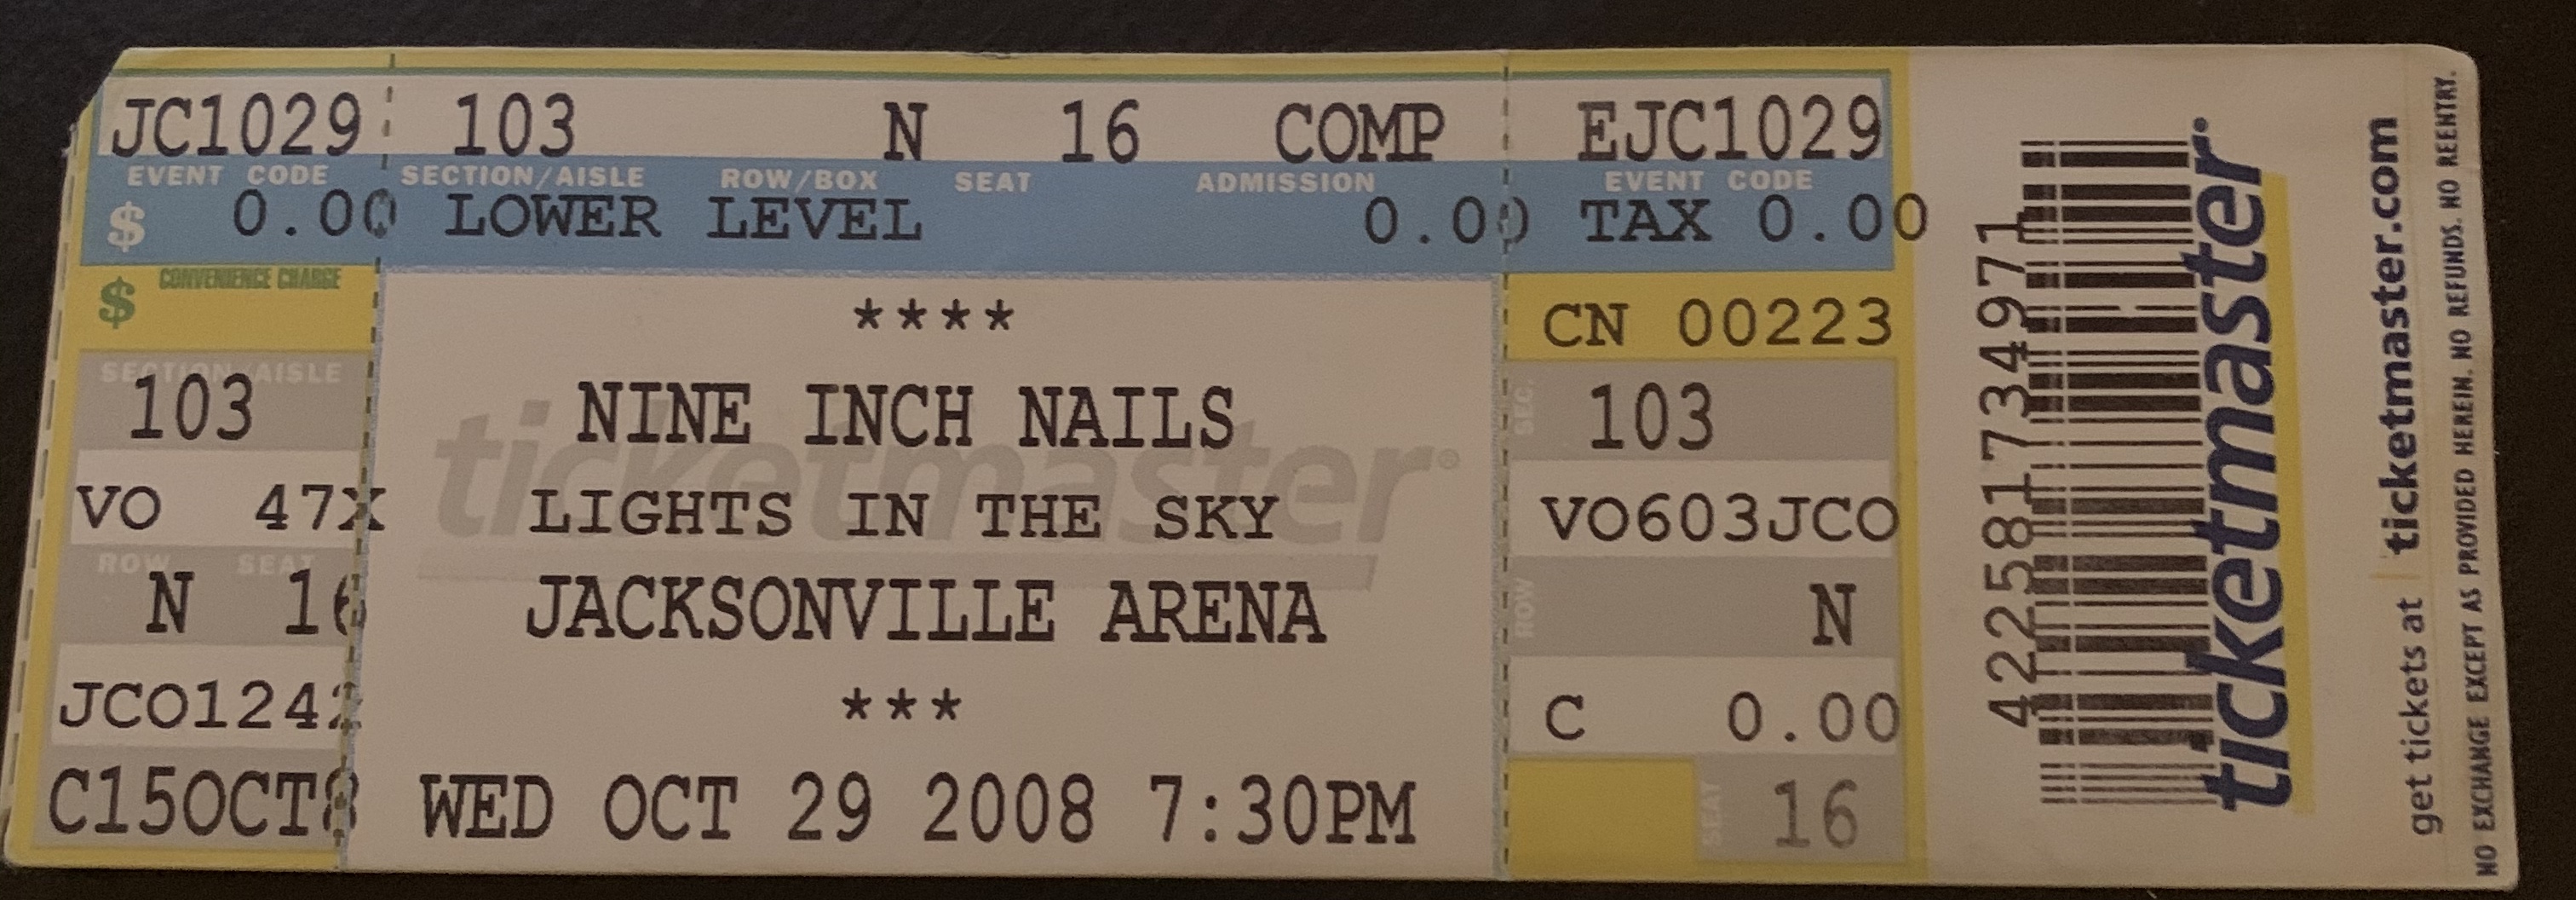 2008/10/29 Ticket